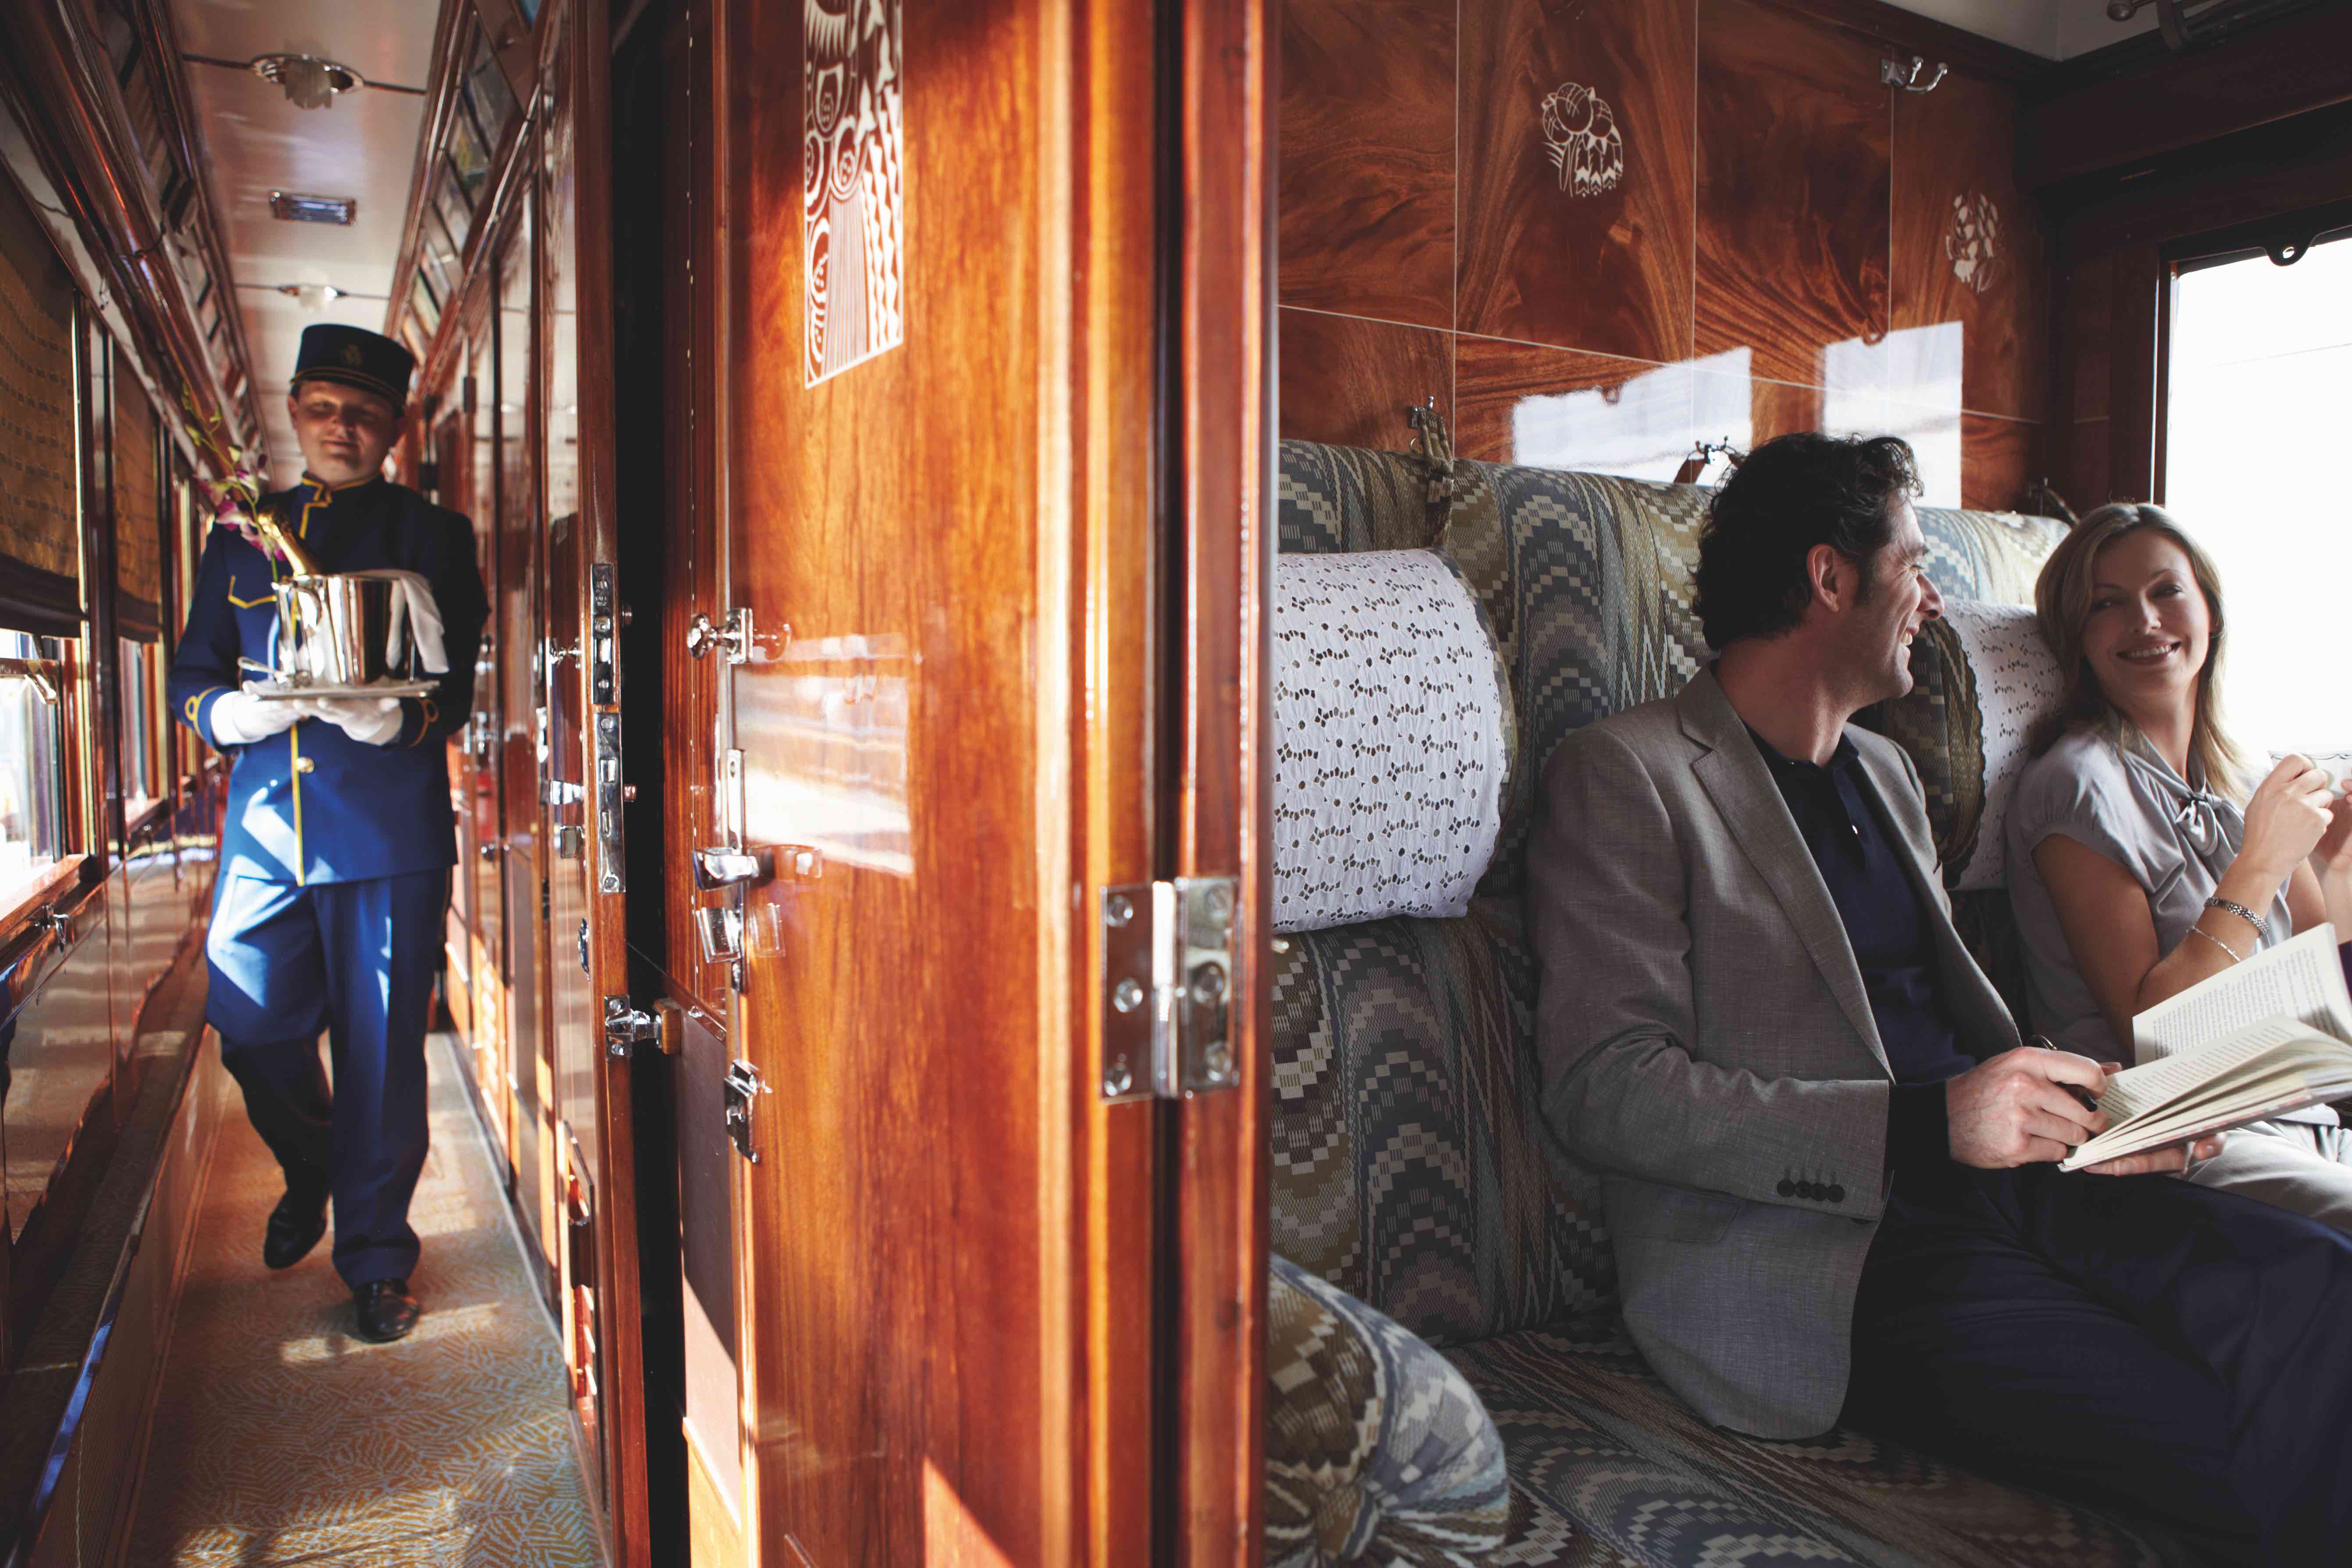 Venice Simplon Orient Express 的每節車廂上都配備有專屬的管家與服務人員，不僅硬體設施高規格，在服務上也完全是五星等級。